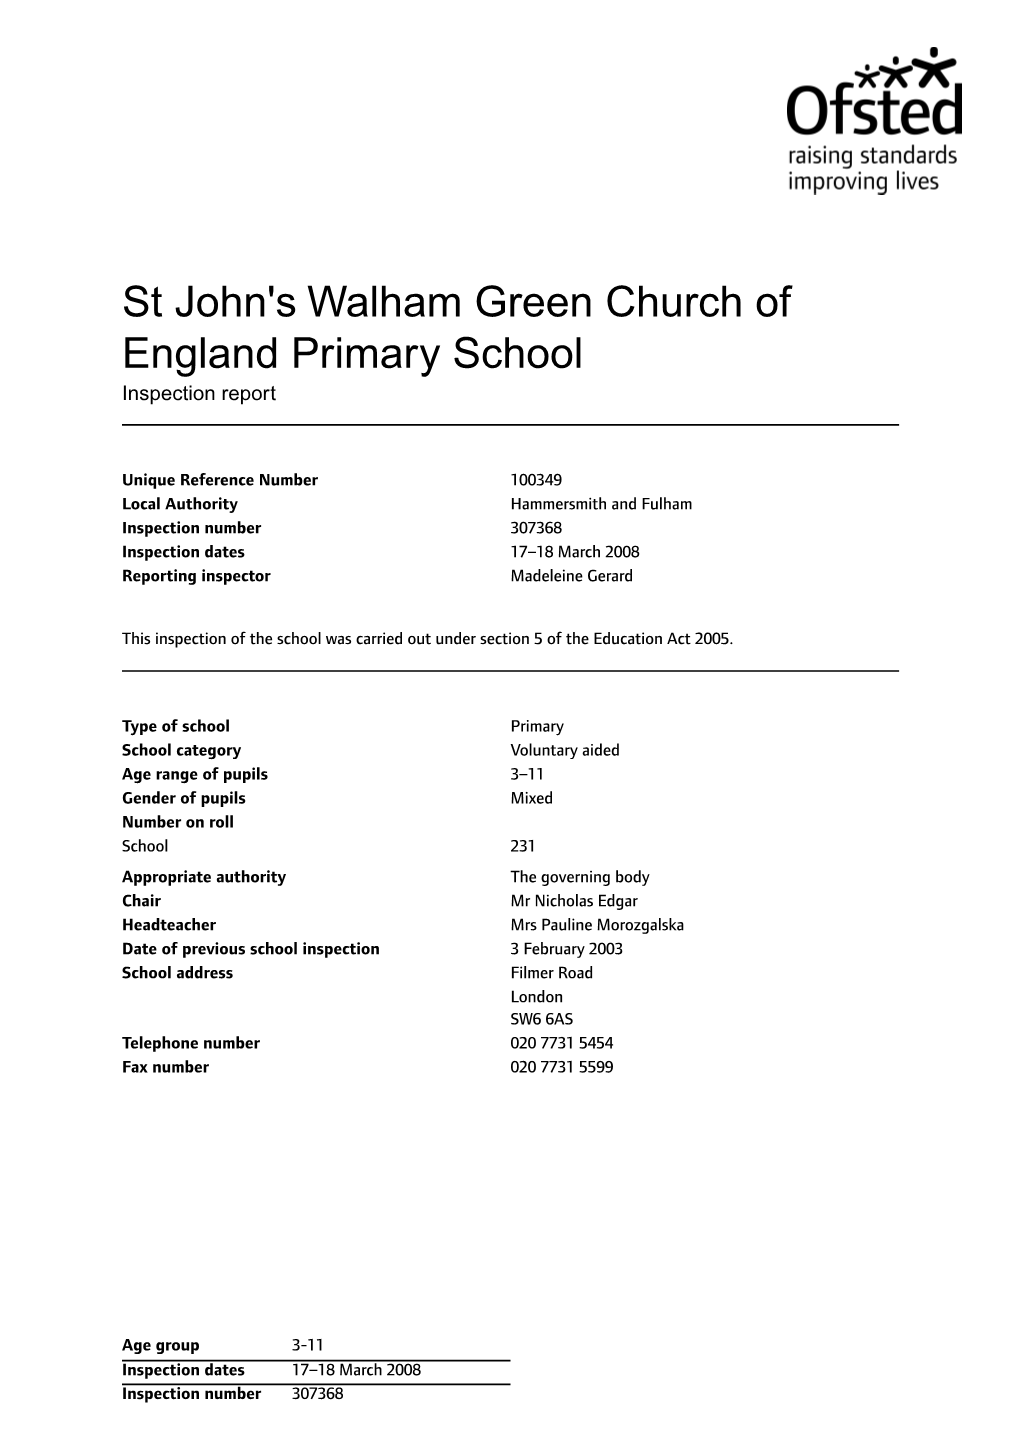 St John's Walham Green Church of England Primary School Inspection Report